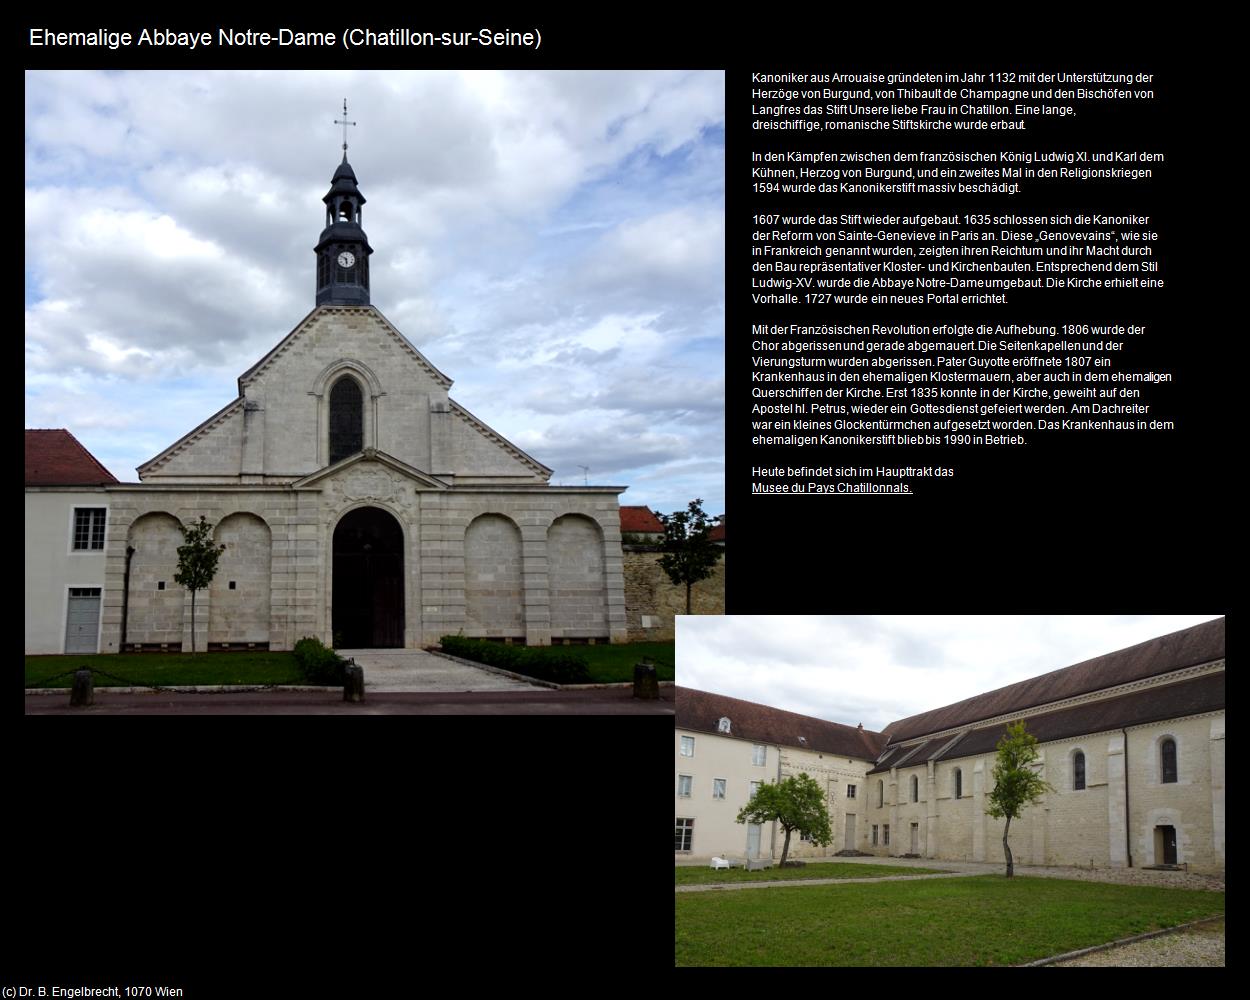 Ehem. Abbaye Notre-Dame (Chatillon-sur-Seine (FR-BFC)) in Kulturatlas-FRANKREICH(c)B.Engelbrecht